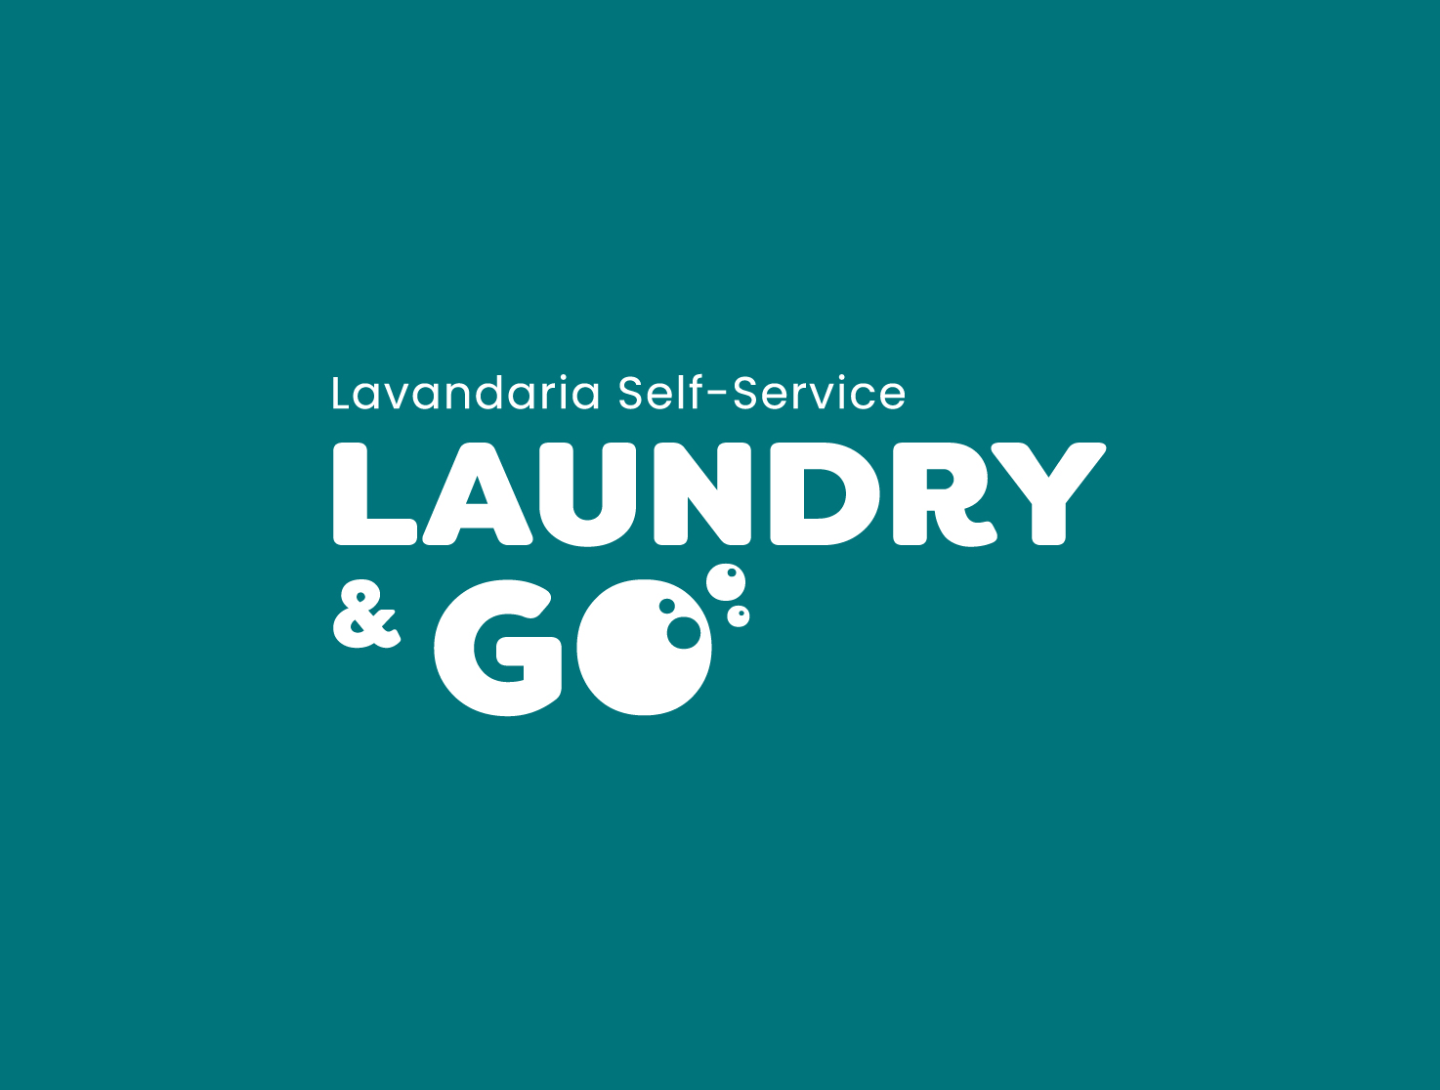 Laundry & Go